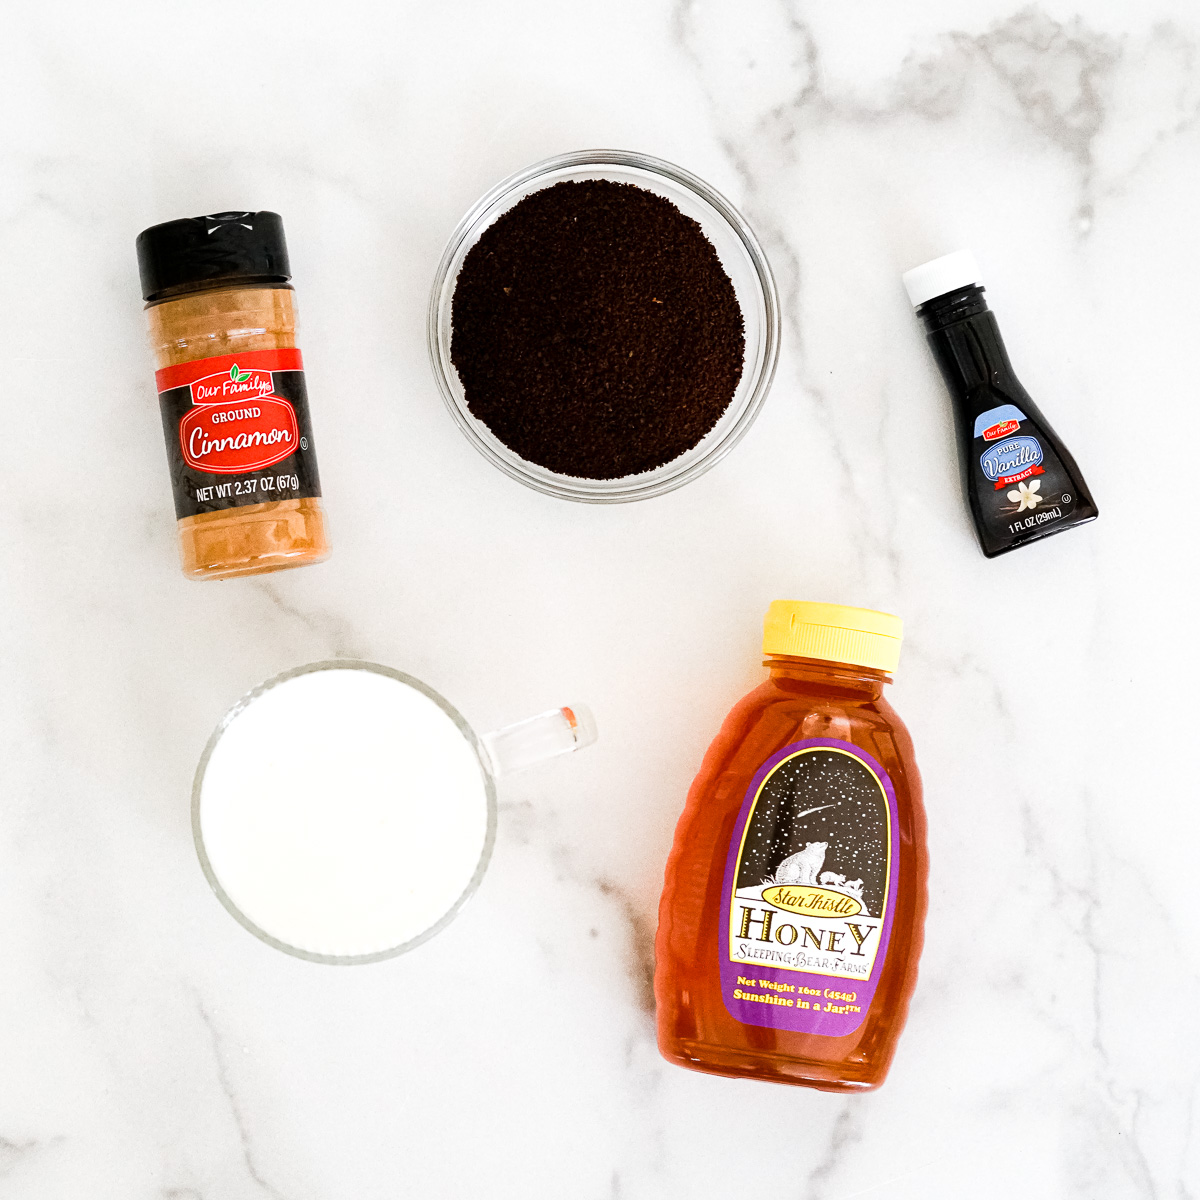 Cinnamon, Coffee, Vanilla, Milk, Honey - Ingredients in a Coffee Honey Recipe